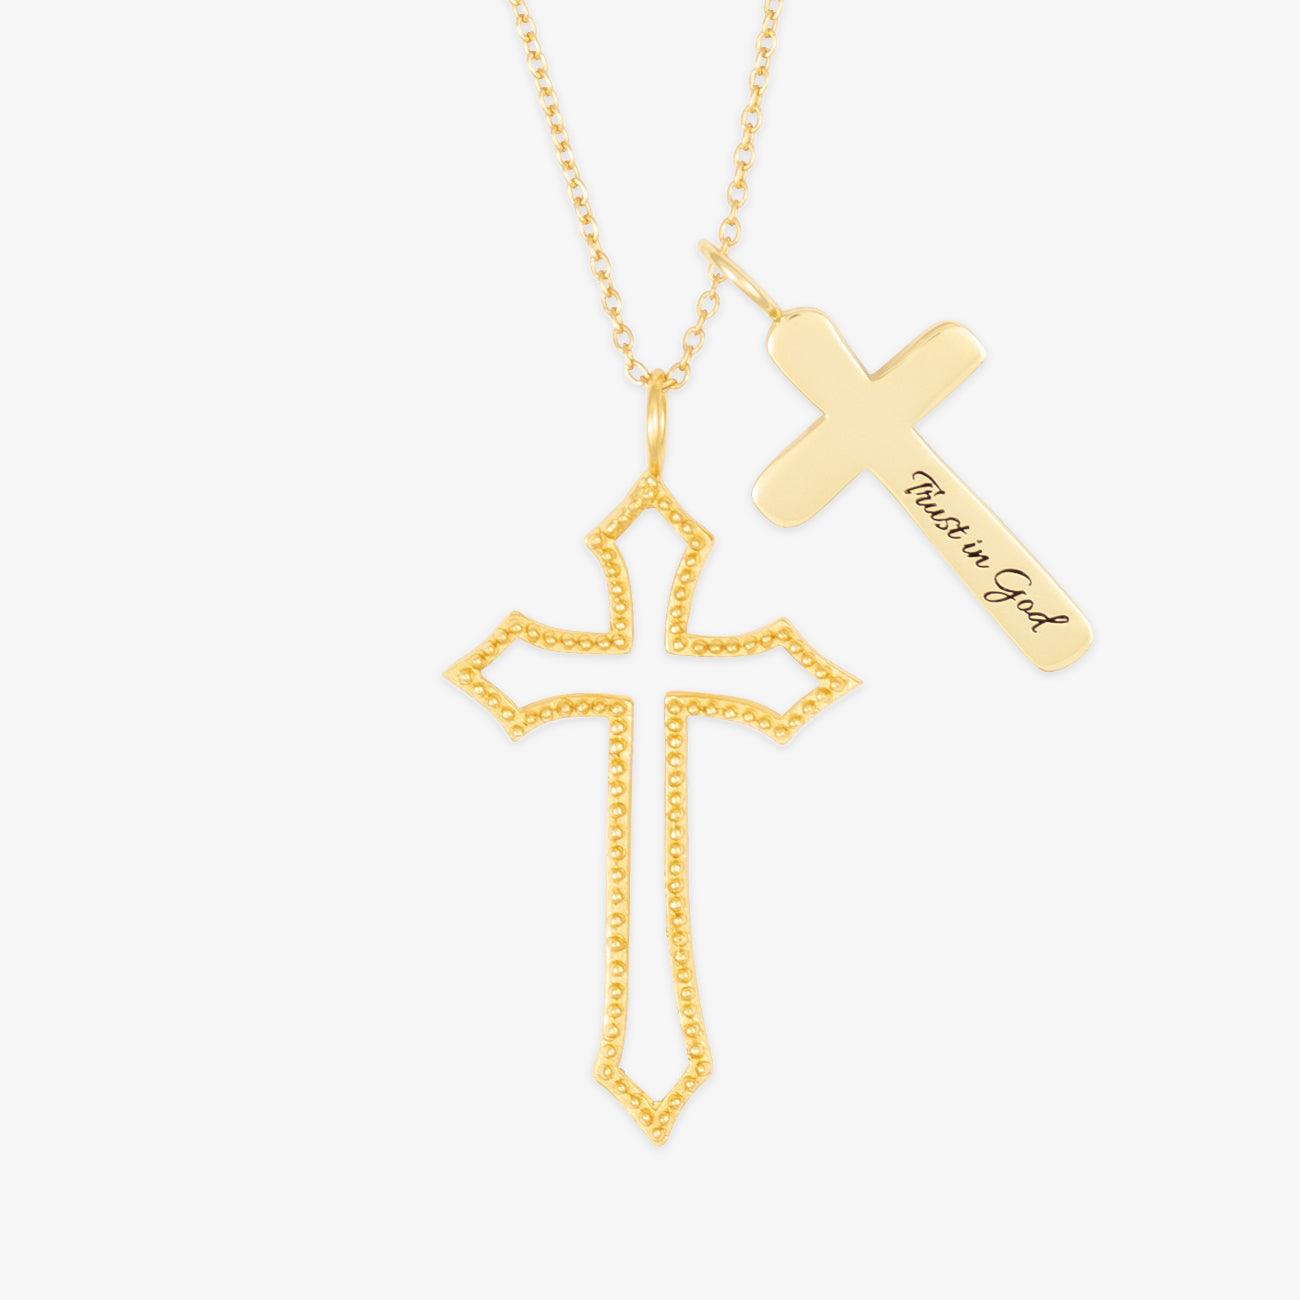 herzschmuck Dual Cross Personalized Necklace